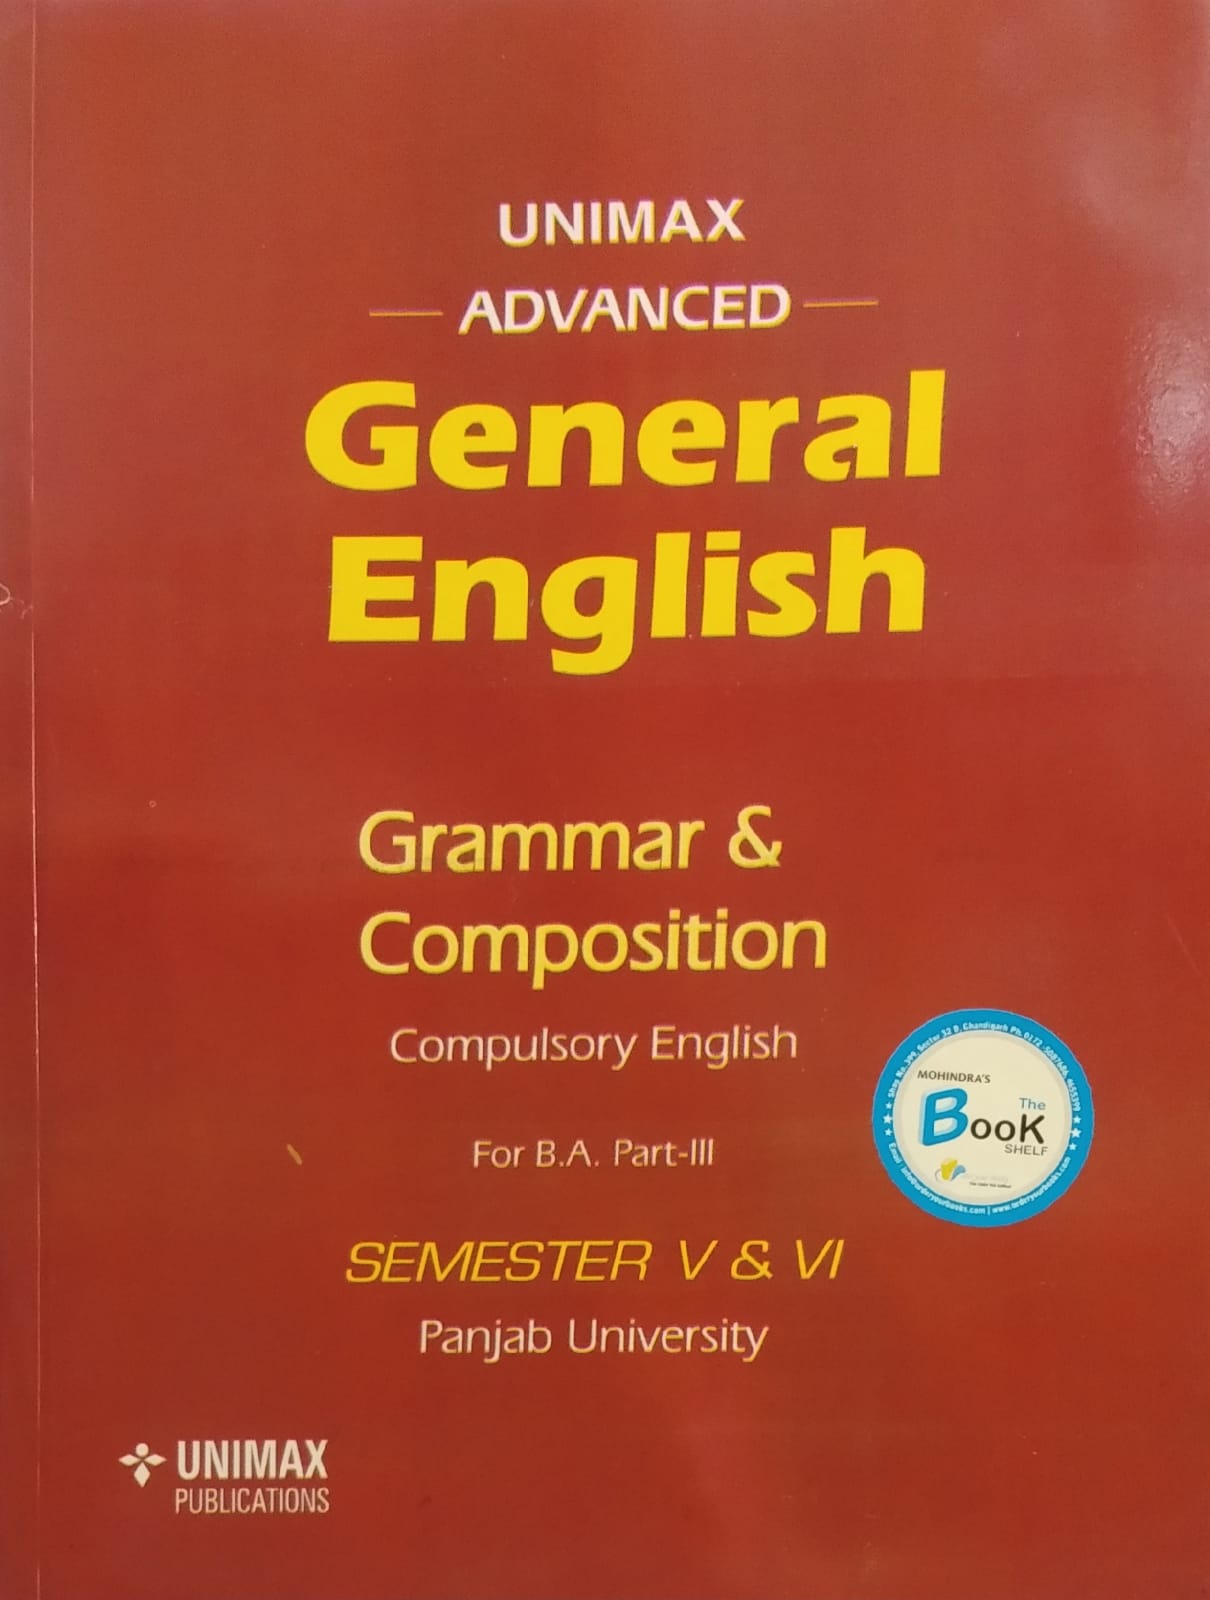 Unimax General English Grammar & Composition for B.A. Part 3, Sem. 5 & 6 (P.U.) by Iqbal Singh, Dr. Dinesh Sharma, Varinder Kumar & Tajinder Kaur, Edition 2022